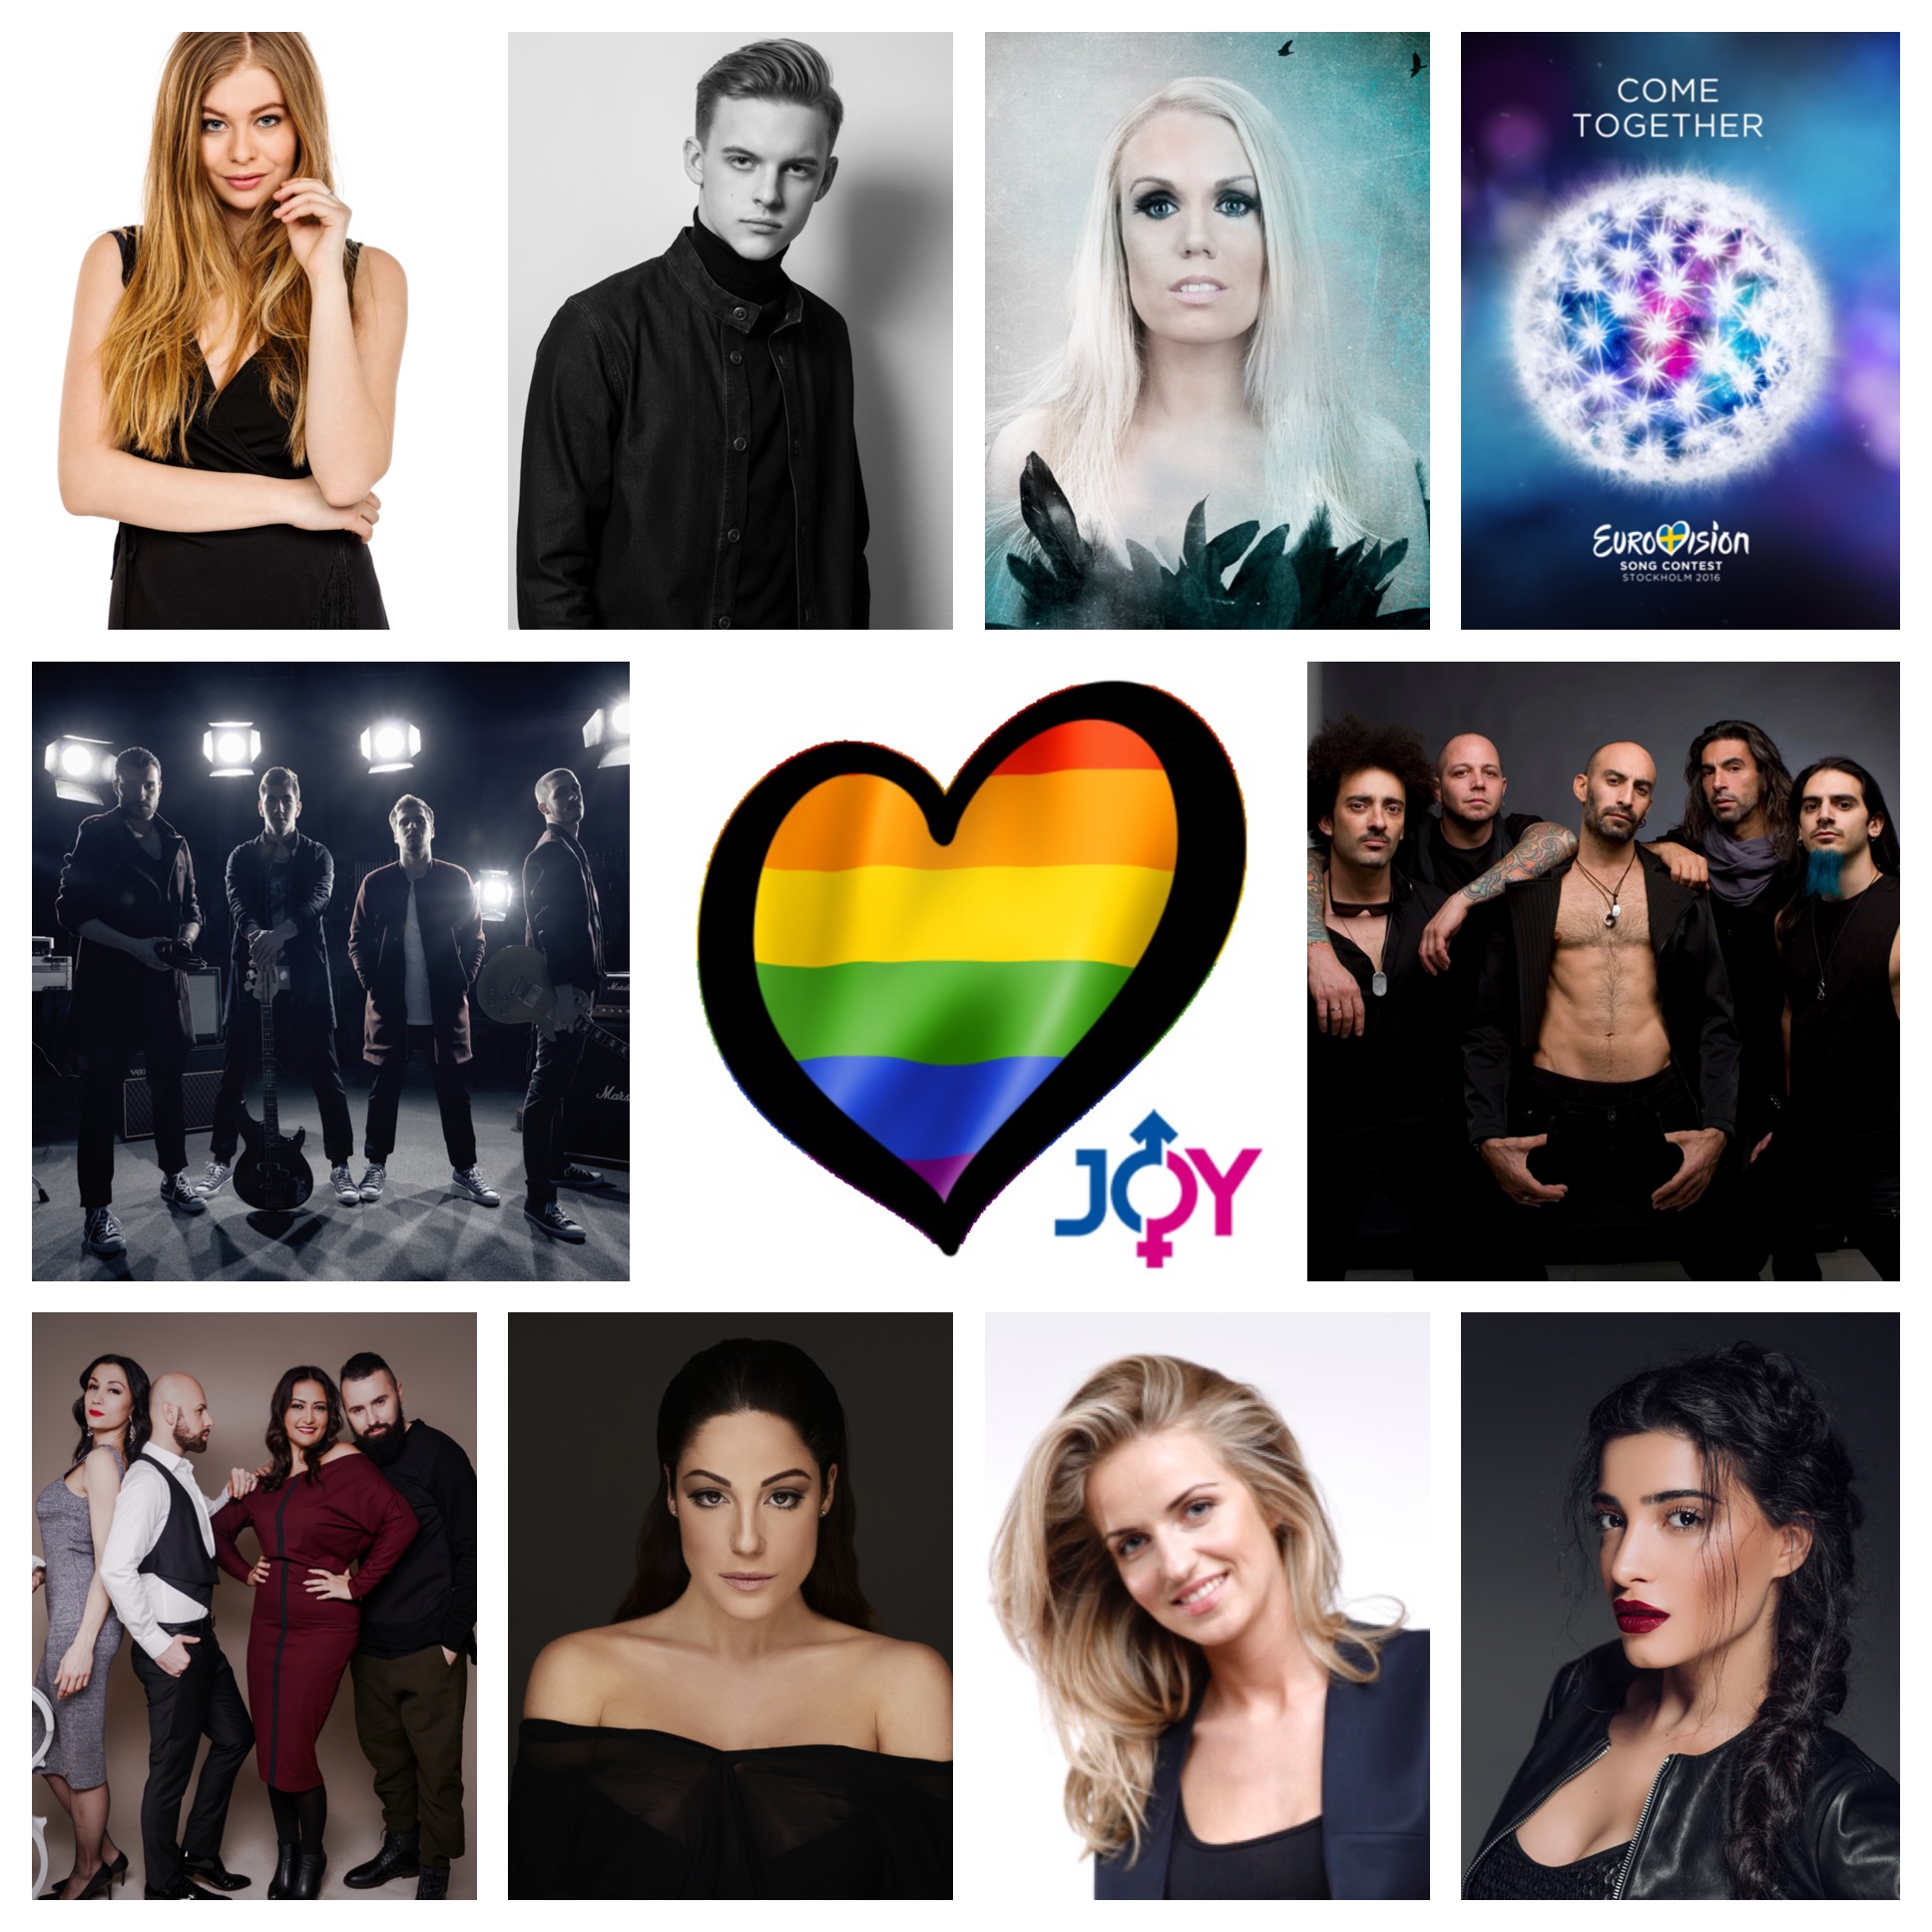 From Czechia to Malta: Eurovision 2016 Semi 1, Second Half Preview